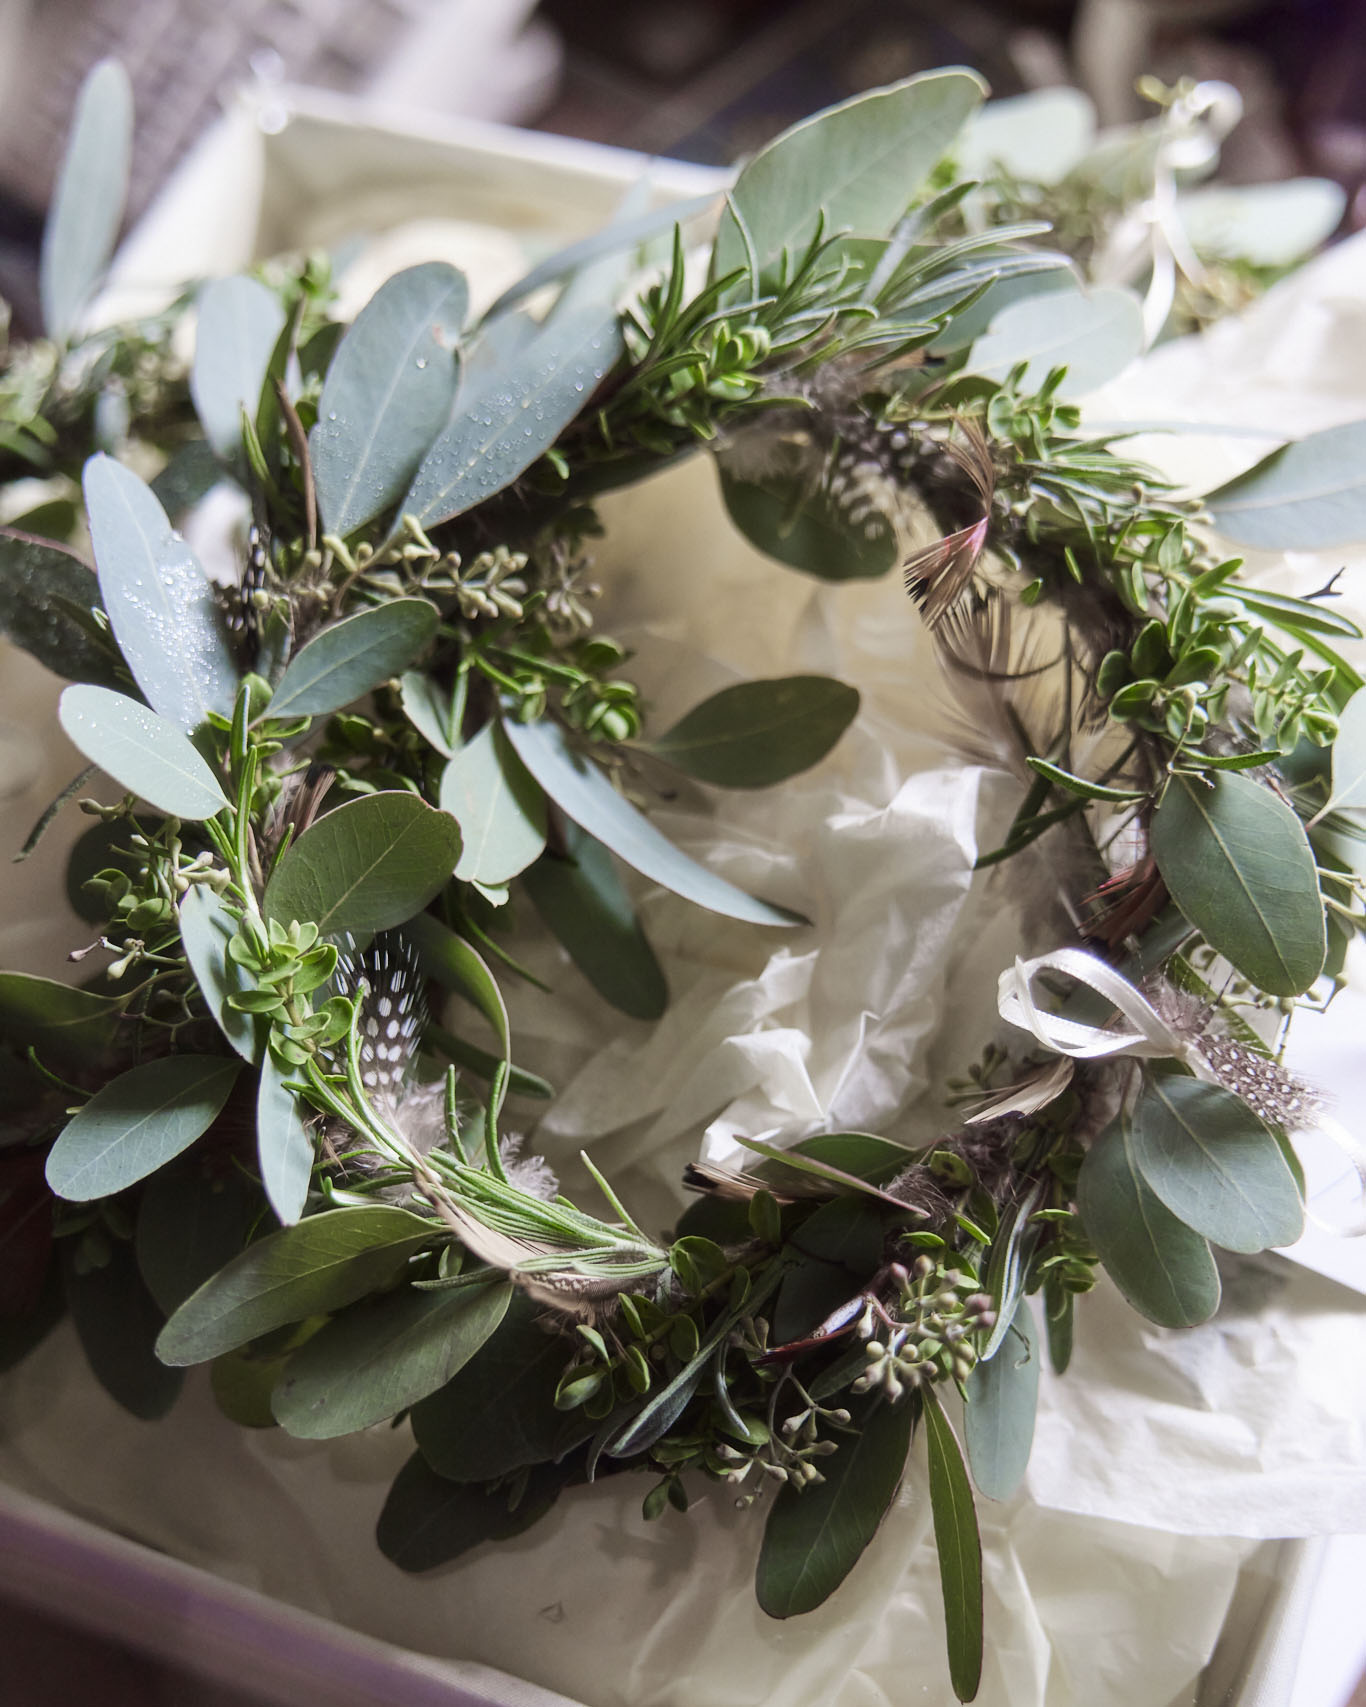 India Hicks's Wedding Party Flowers, junior bridesmaid headpieces, eucalyptus crowns